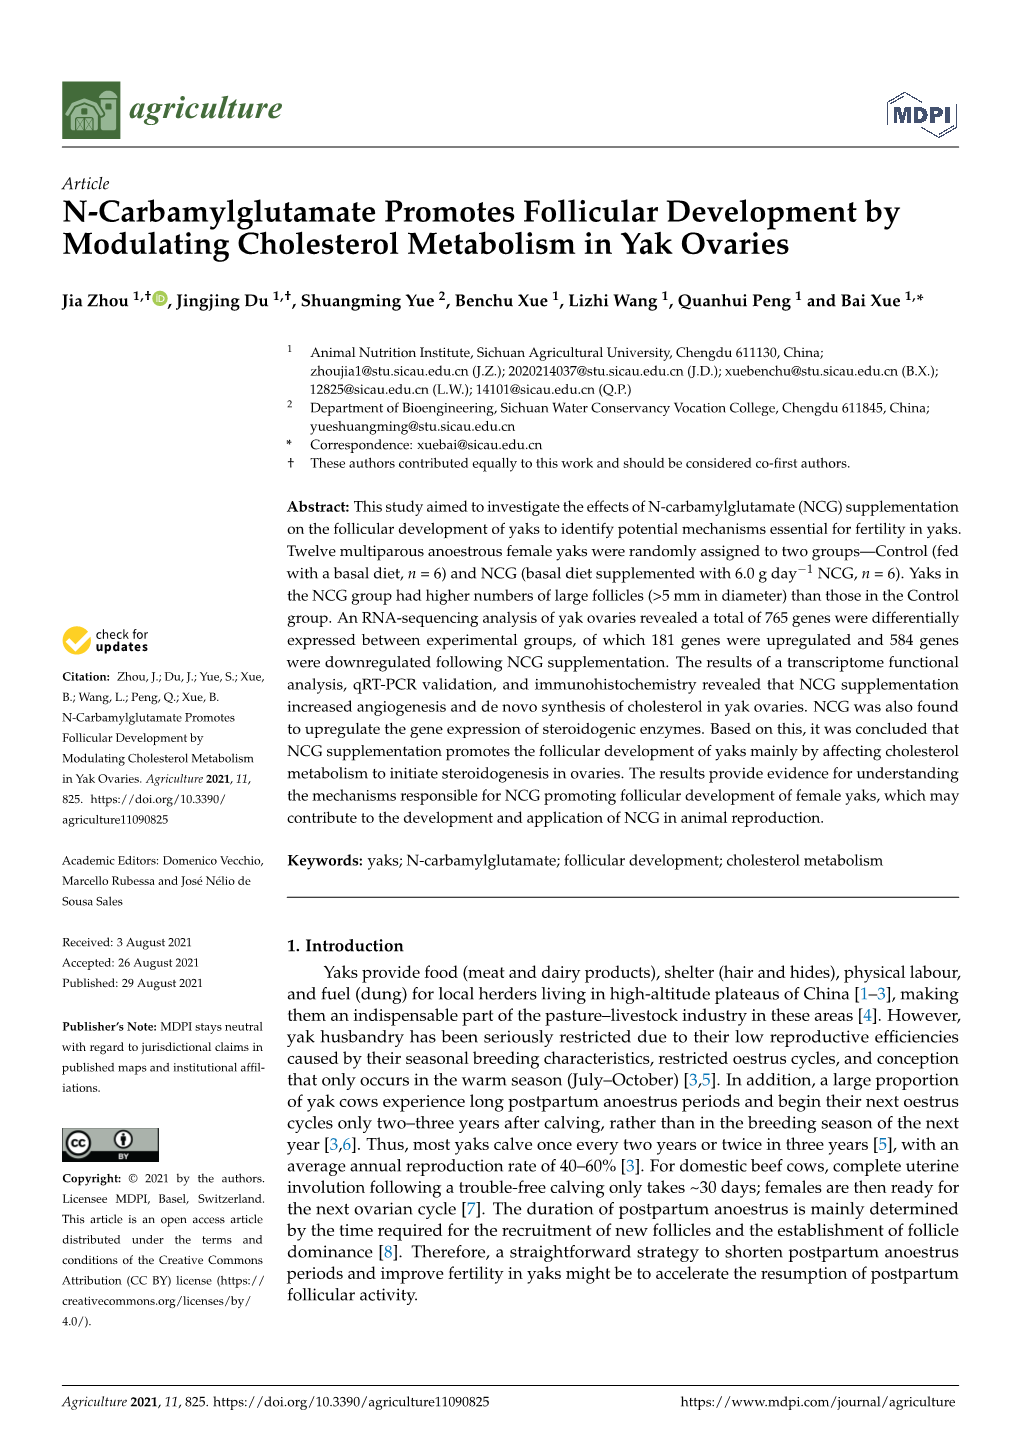 N-Carbamylglutamate Promotes Follicular Development by Modulating Cholesterol Metabolism in Yak Ovaries